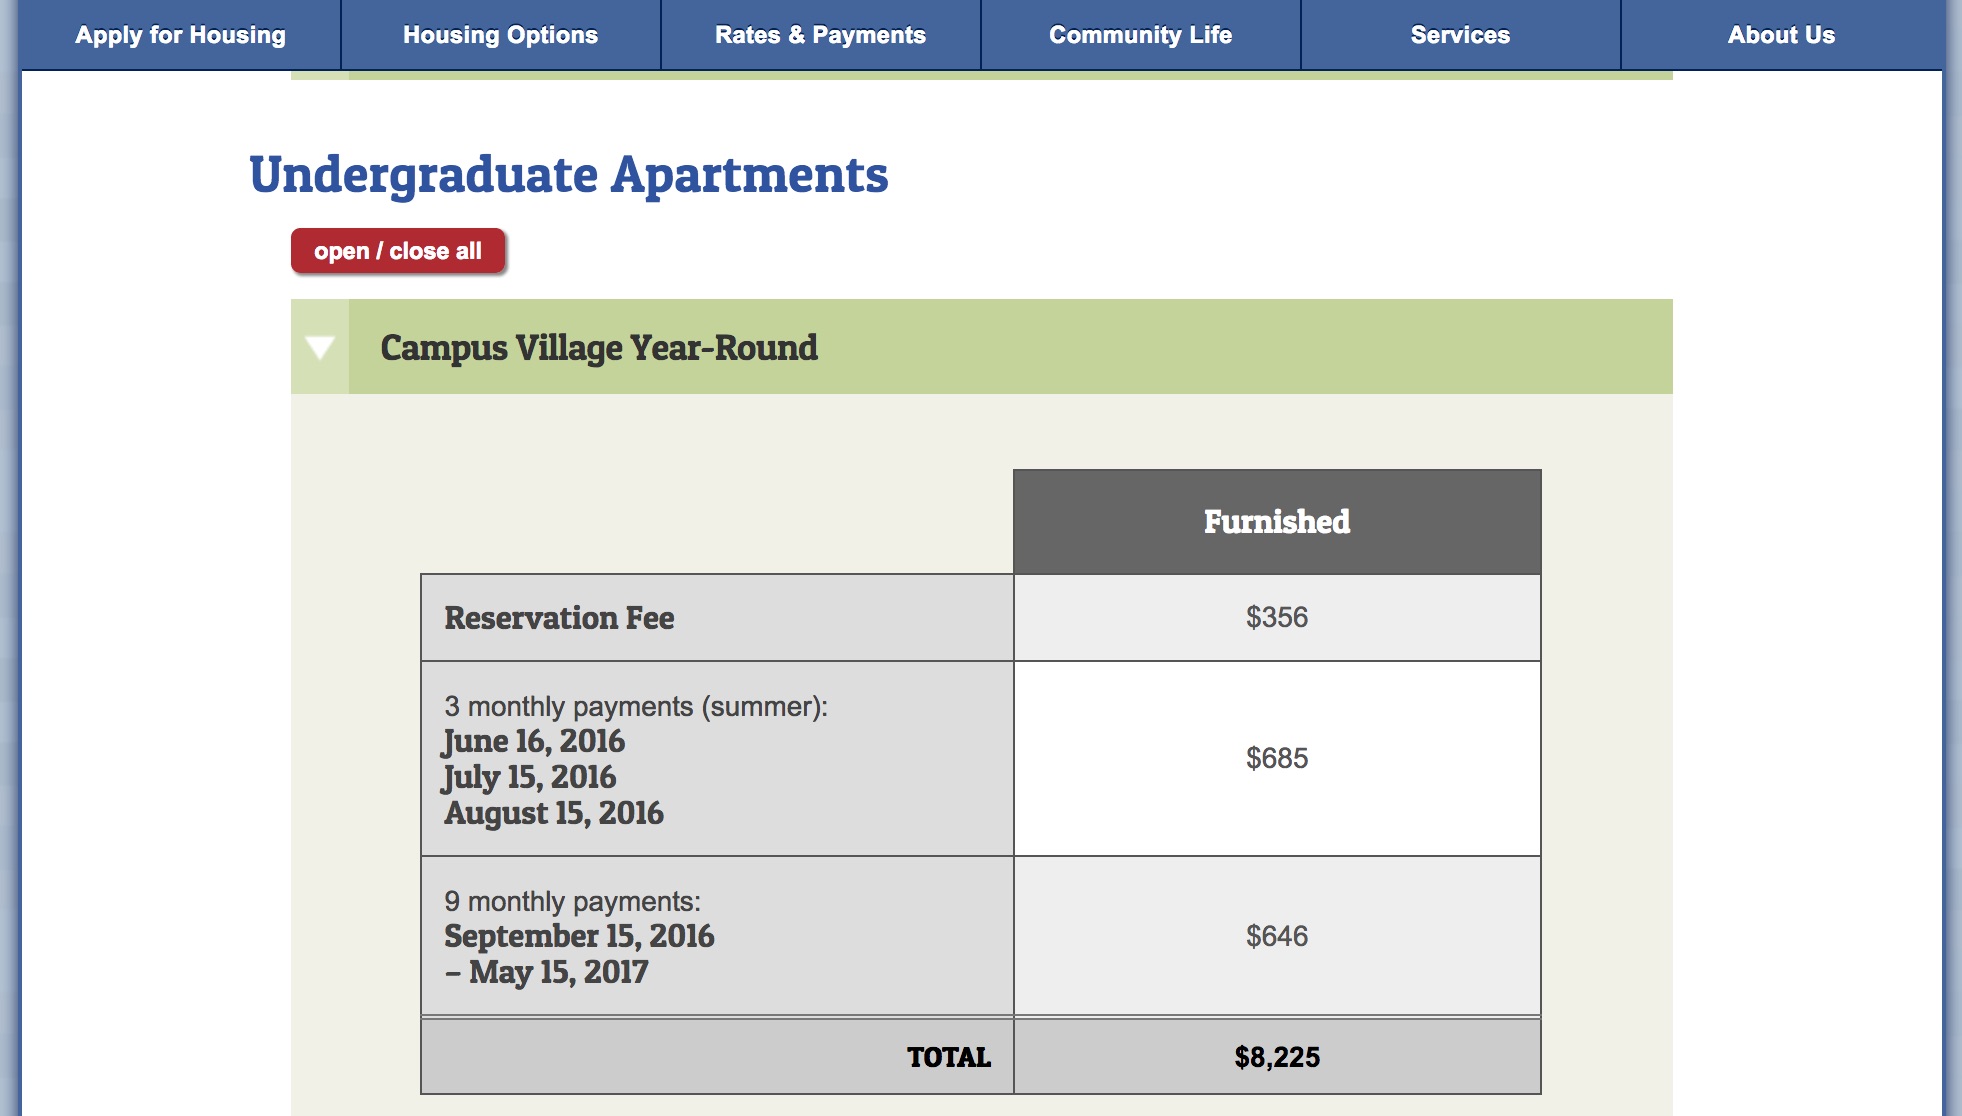 http://www.davisvanguard.org/wp-content/uploads/2017/05/UC-Irvine-On-Campus-Apartment-Rates.jpg